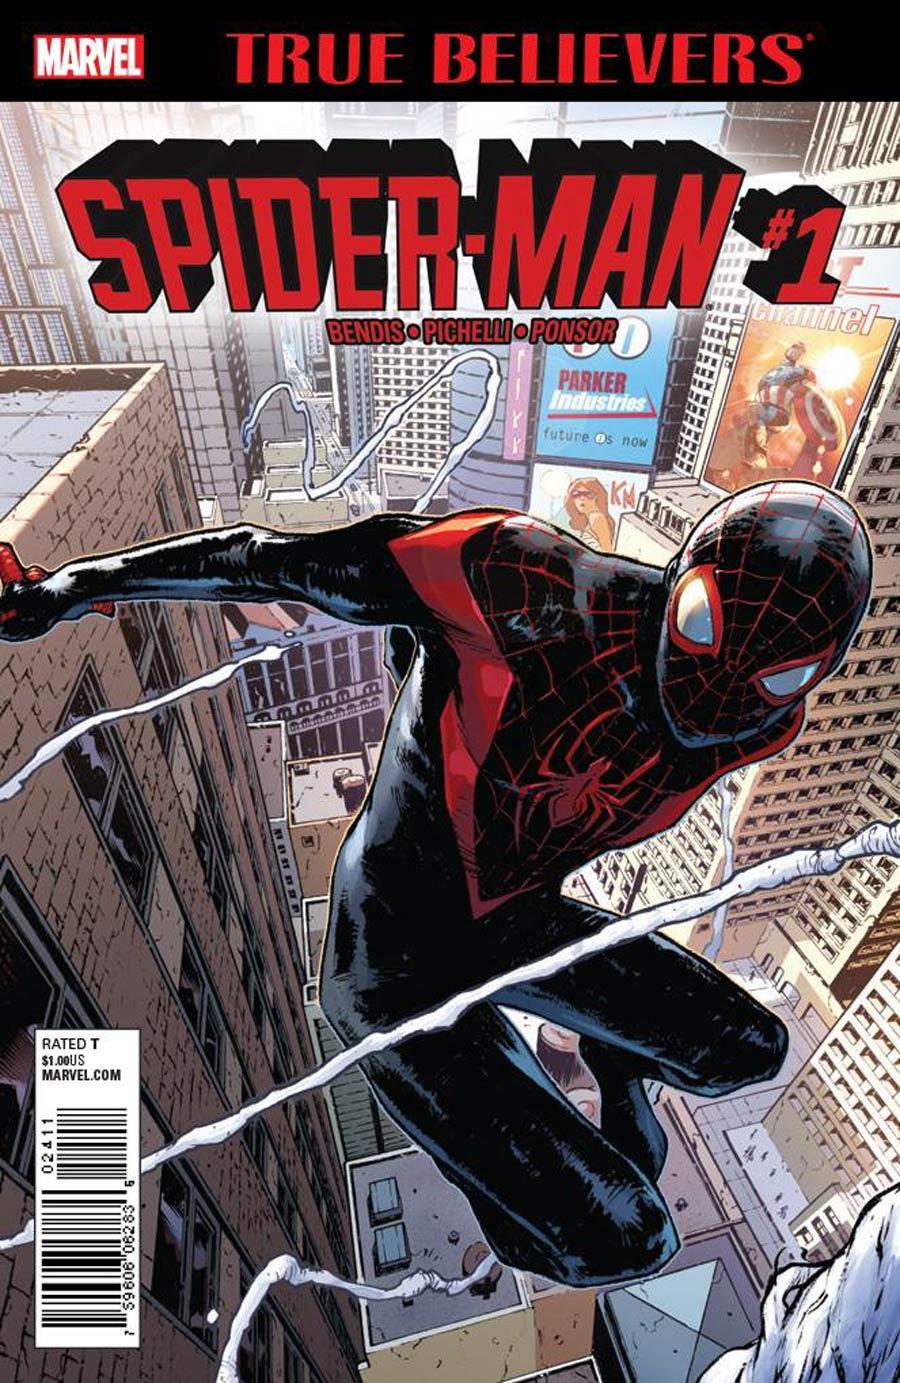 True Believers Miles Morales Spider-Man Vol. 1 #1